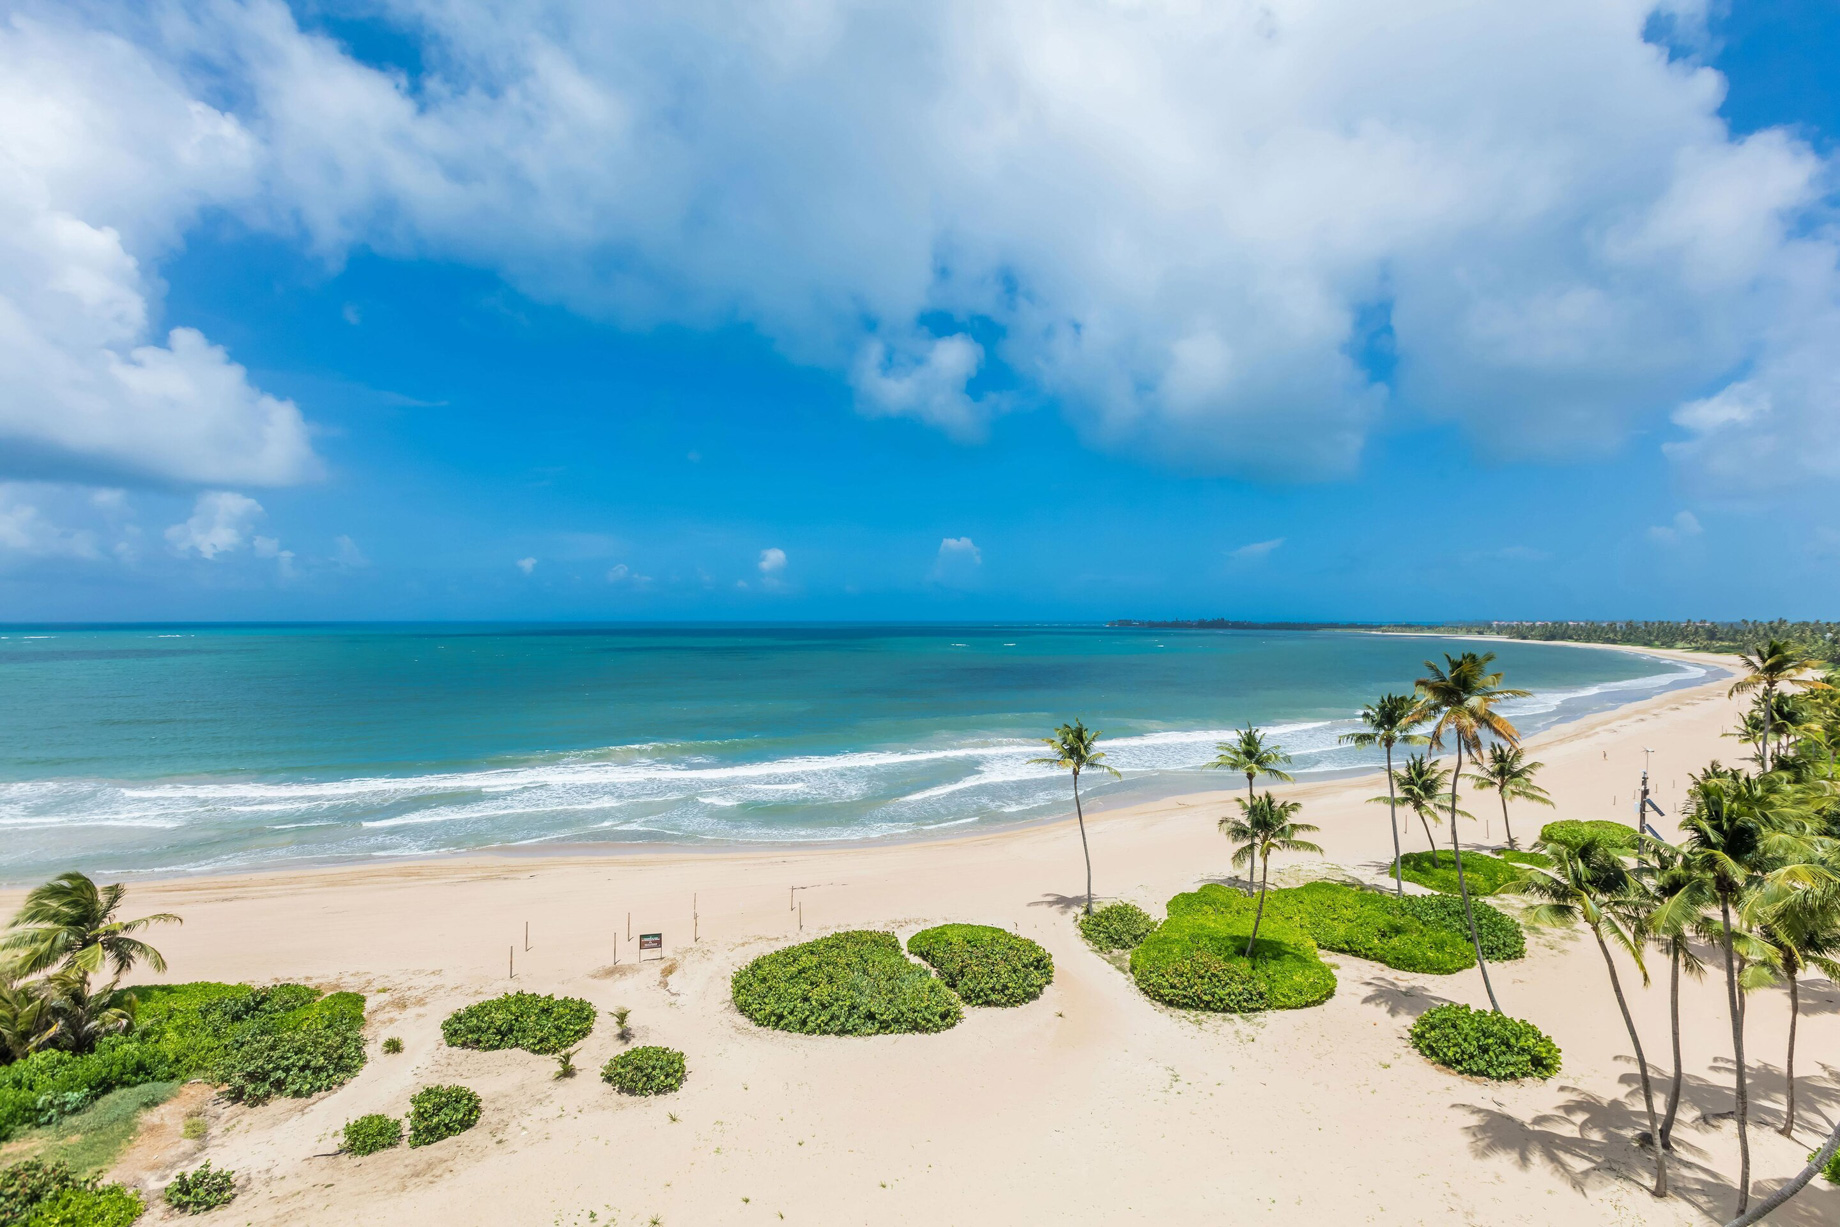 The St. Regis Bahia Beach Resort - Rio Grande, Puerto Rico - Ocean Drive Residences Oceanfront Views